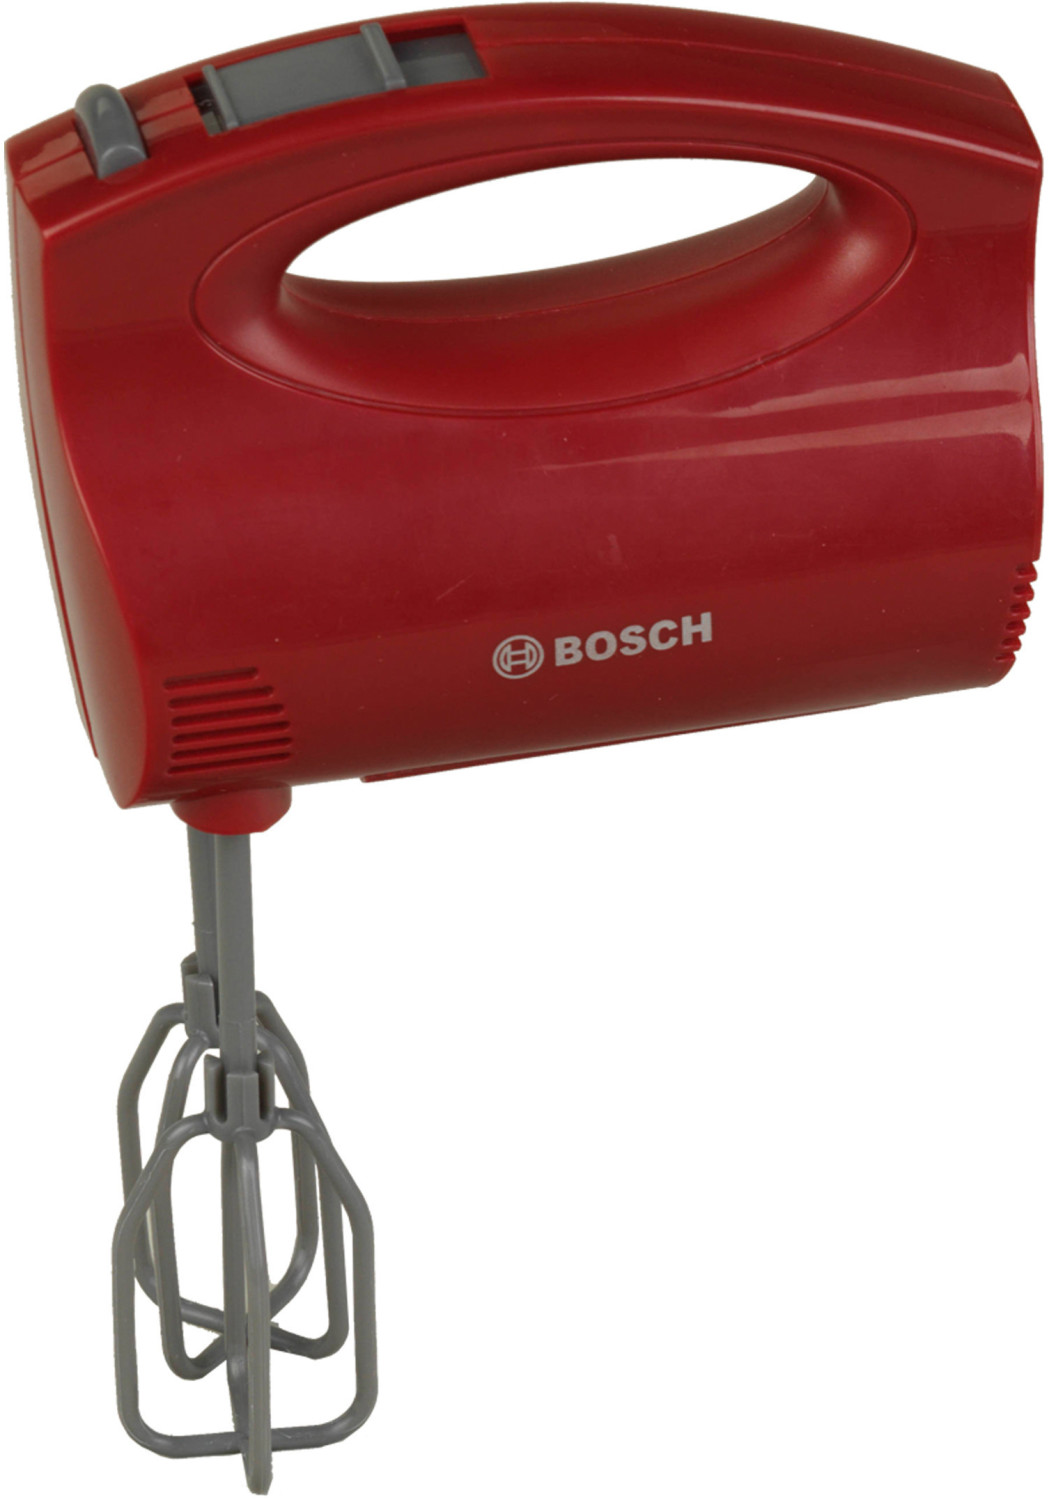 klein toys Frusta elettrica giocattolo Bosch a € 4,24 (oggi